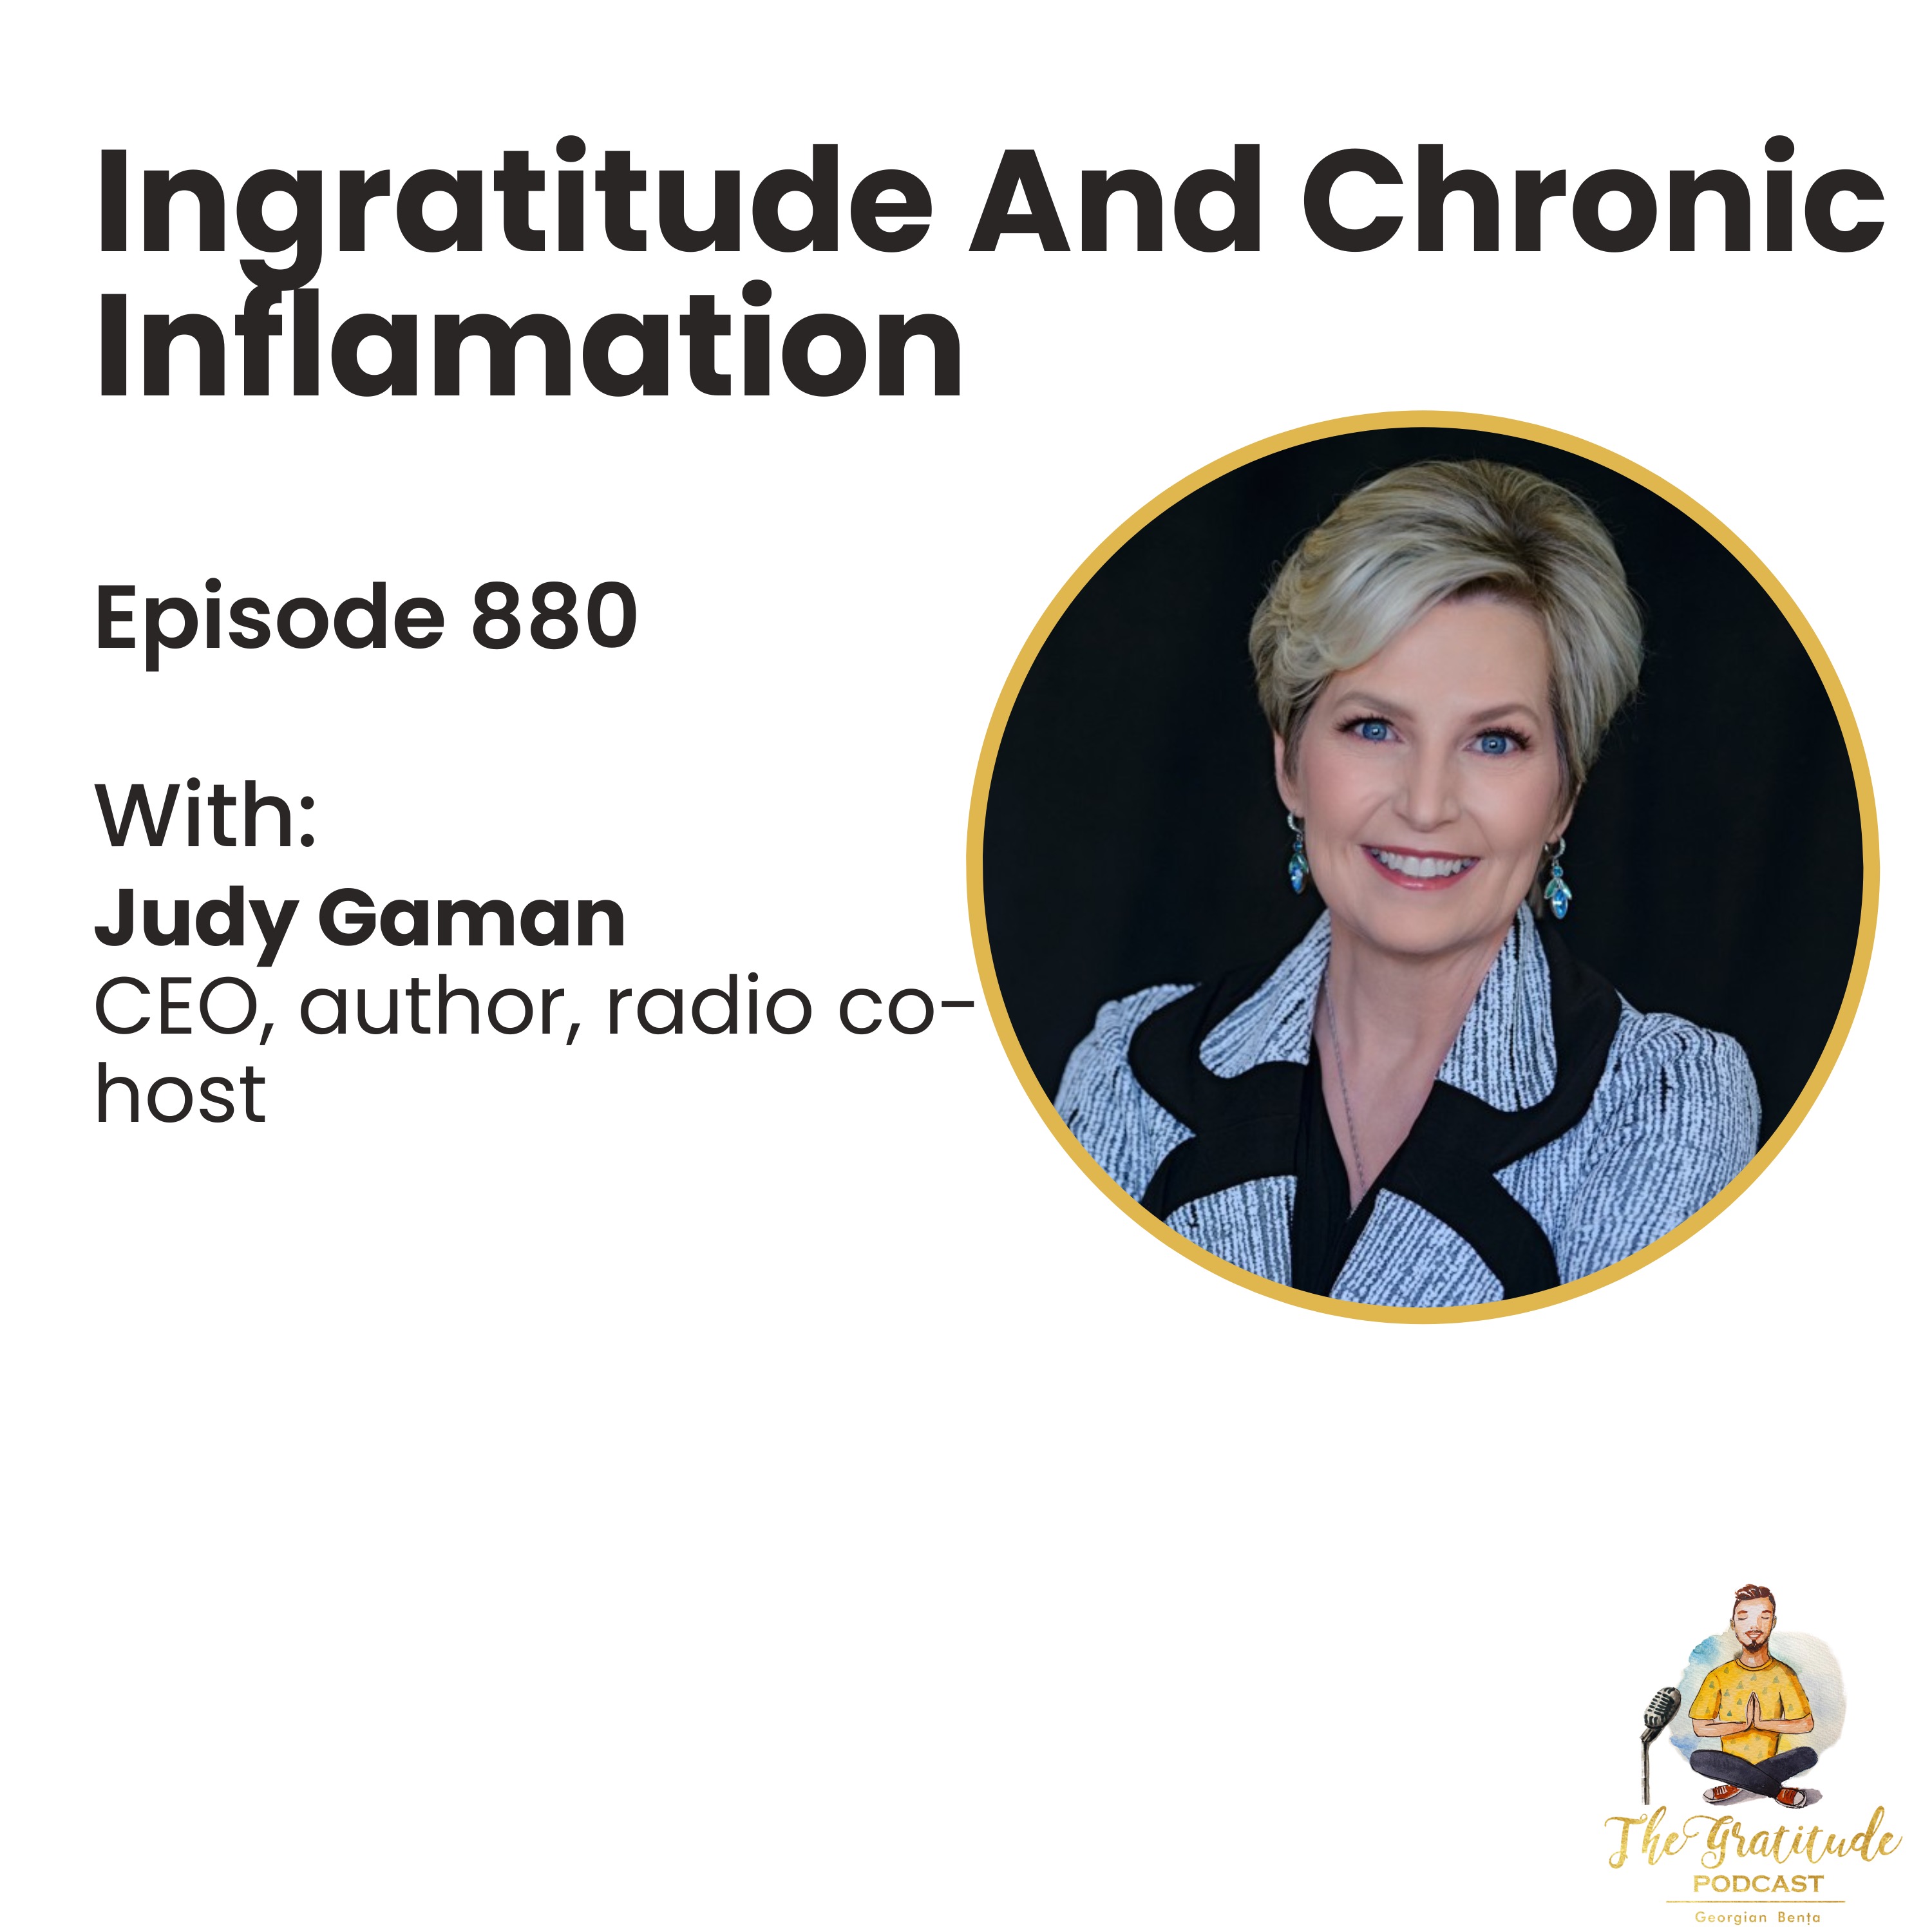 Ingratitude And Chronic Inflamation - Judy Gaman (ep. 880)